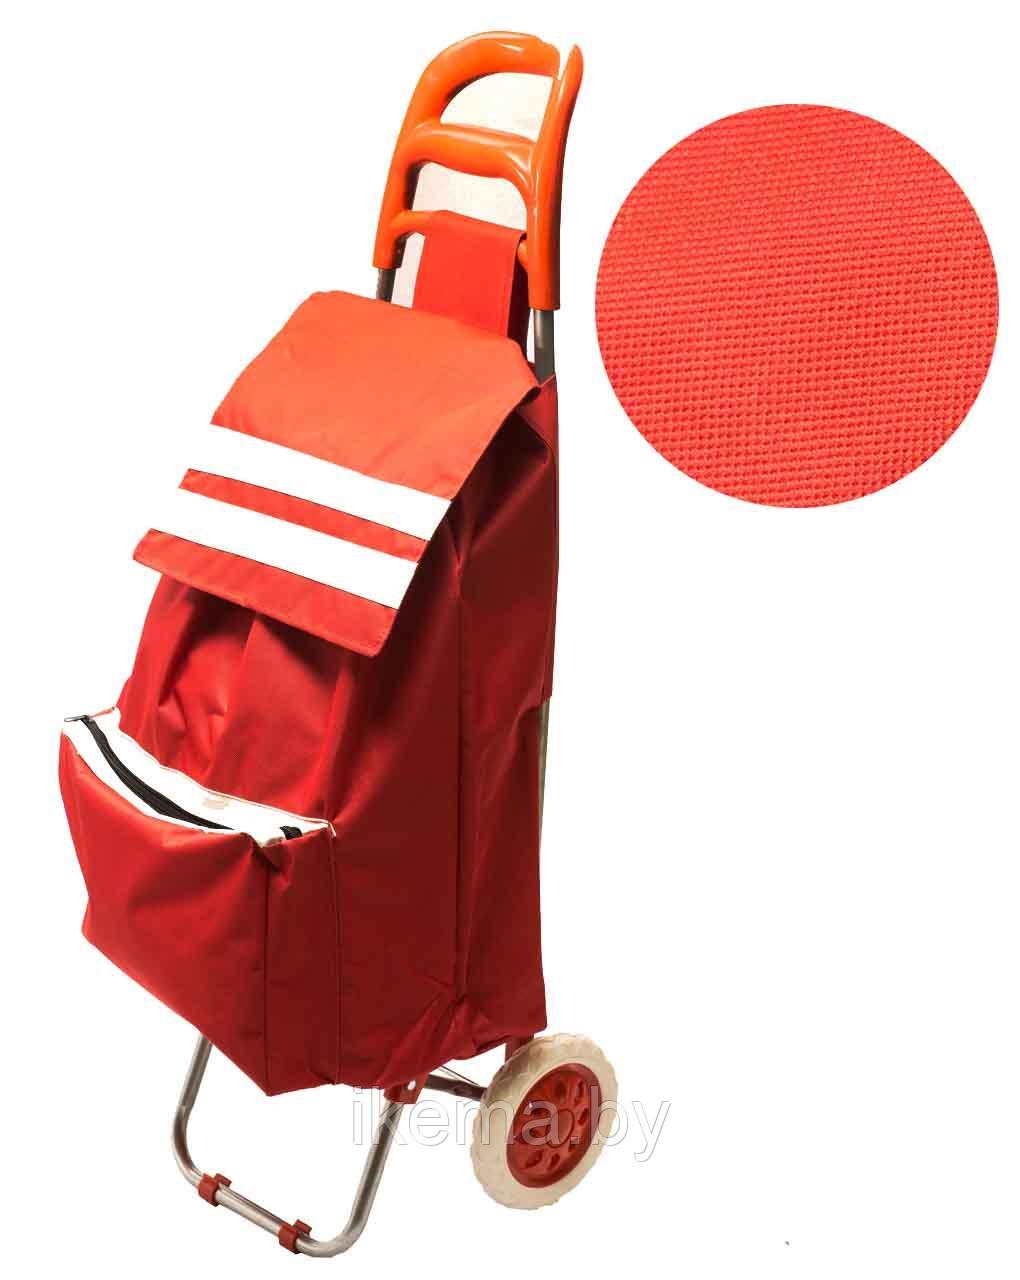 Хозяйственная сумка-тележка (1301-D) цвет №2 красный. Сумка 55*33*20 cм, Каркас 95*33*20 см